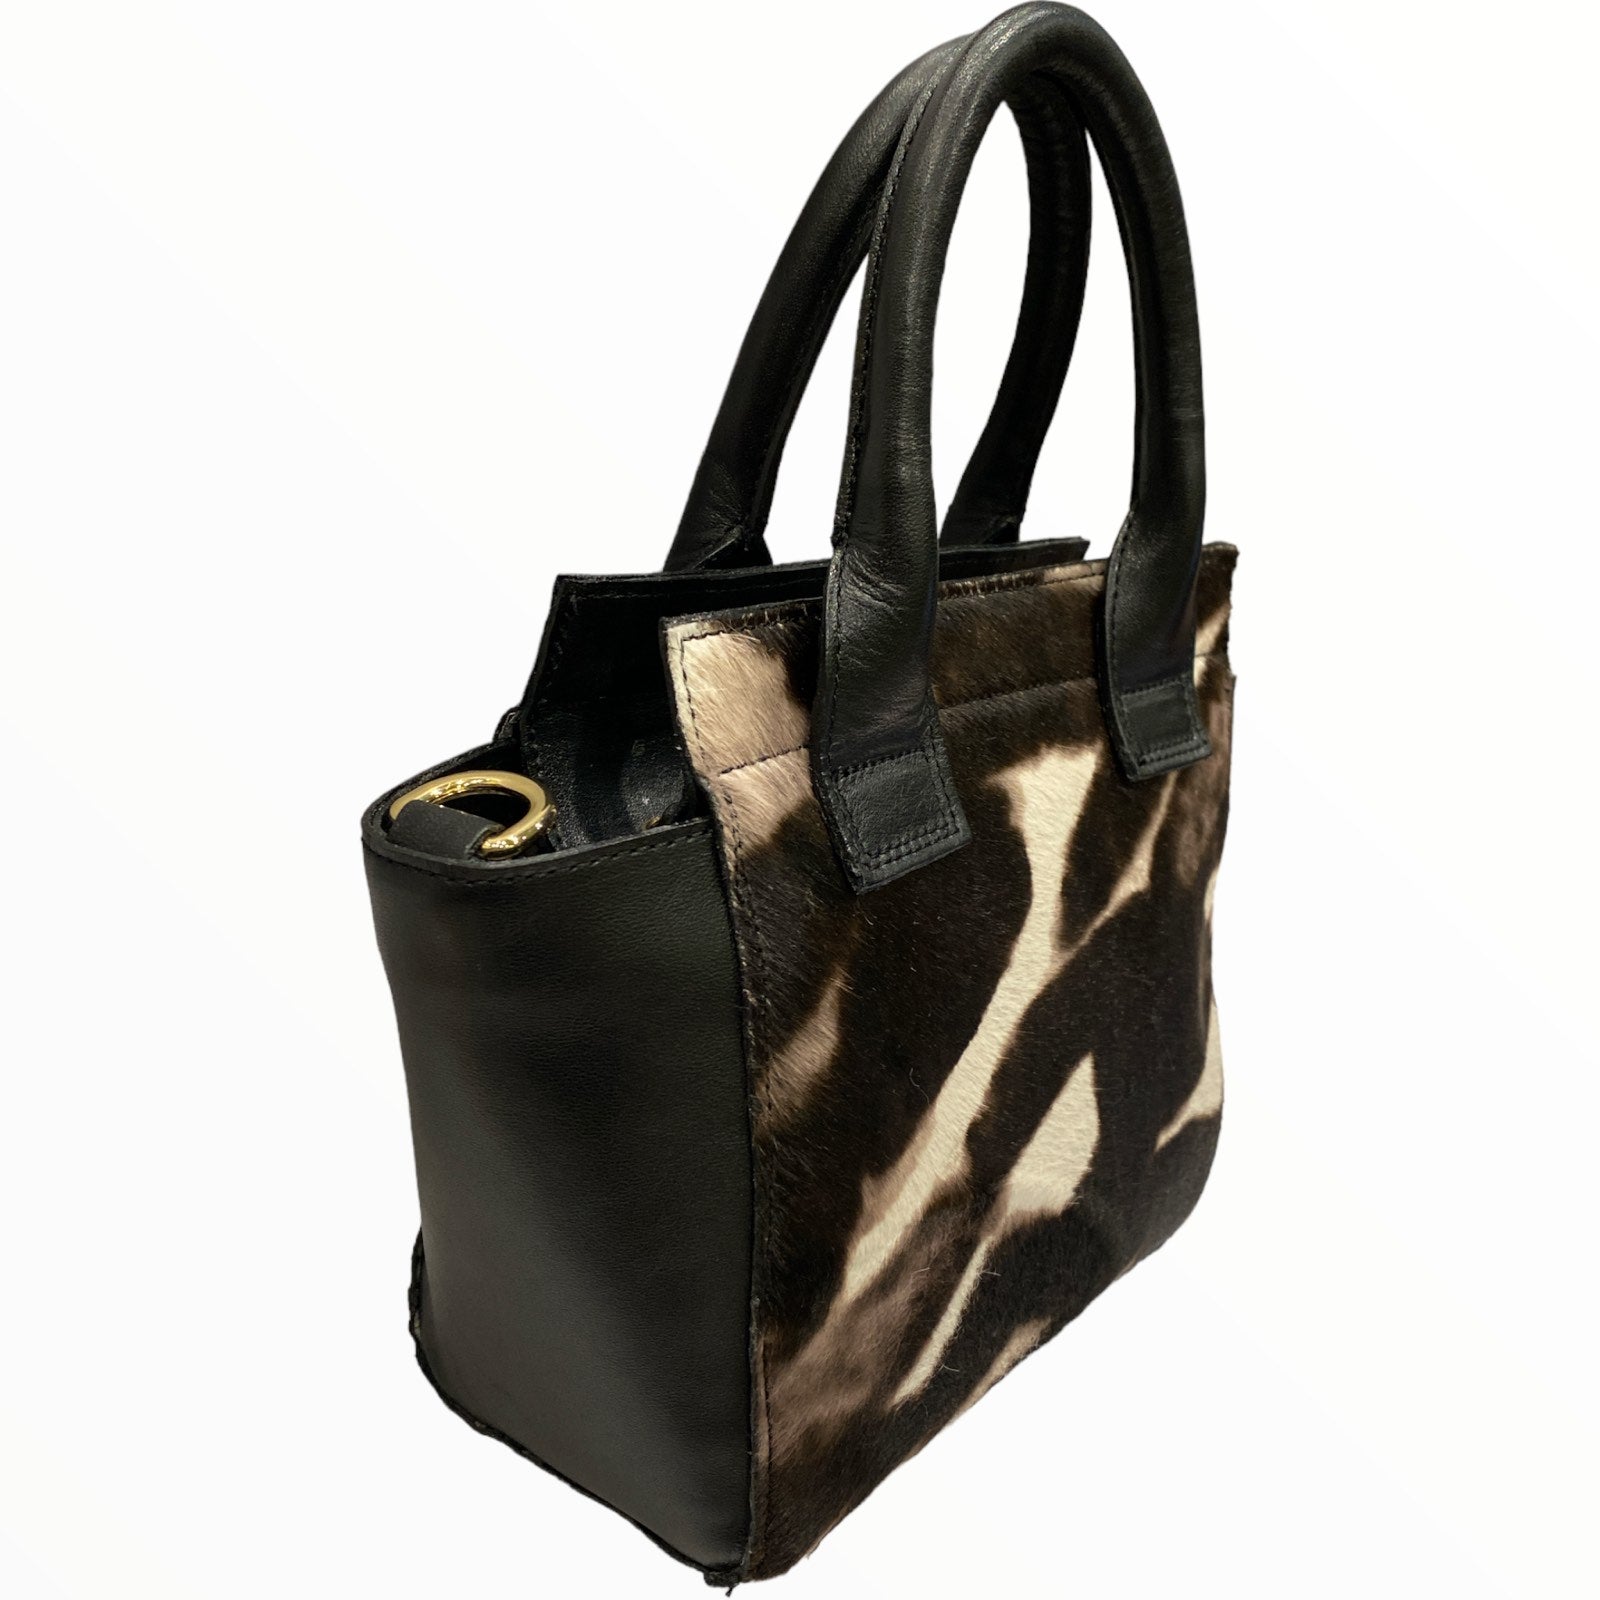 Gina mini. Black and white calf-hair leather tote bag